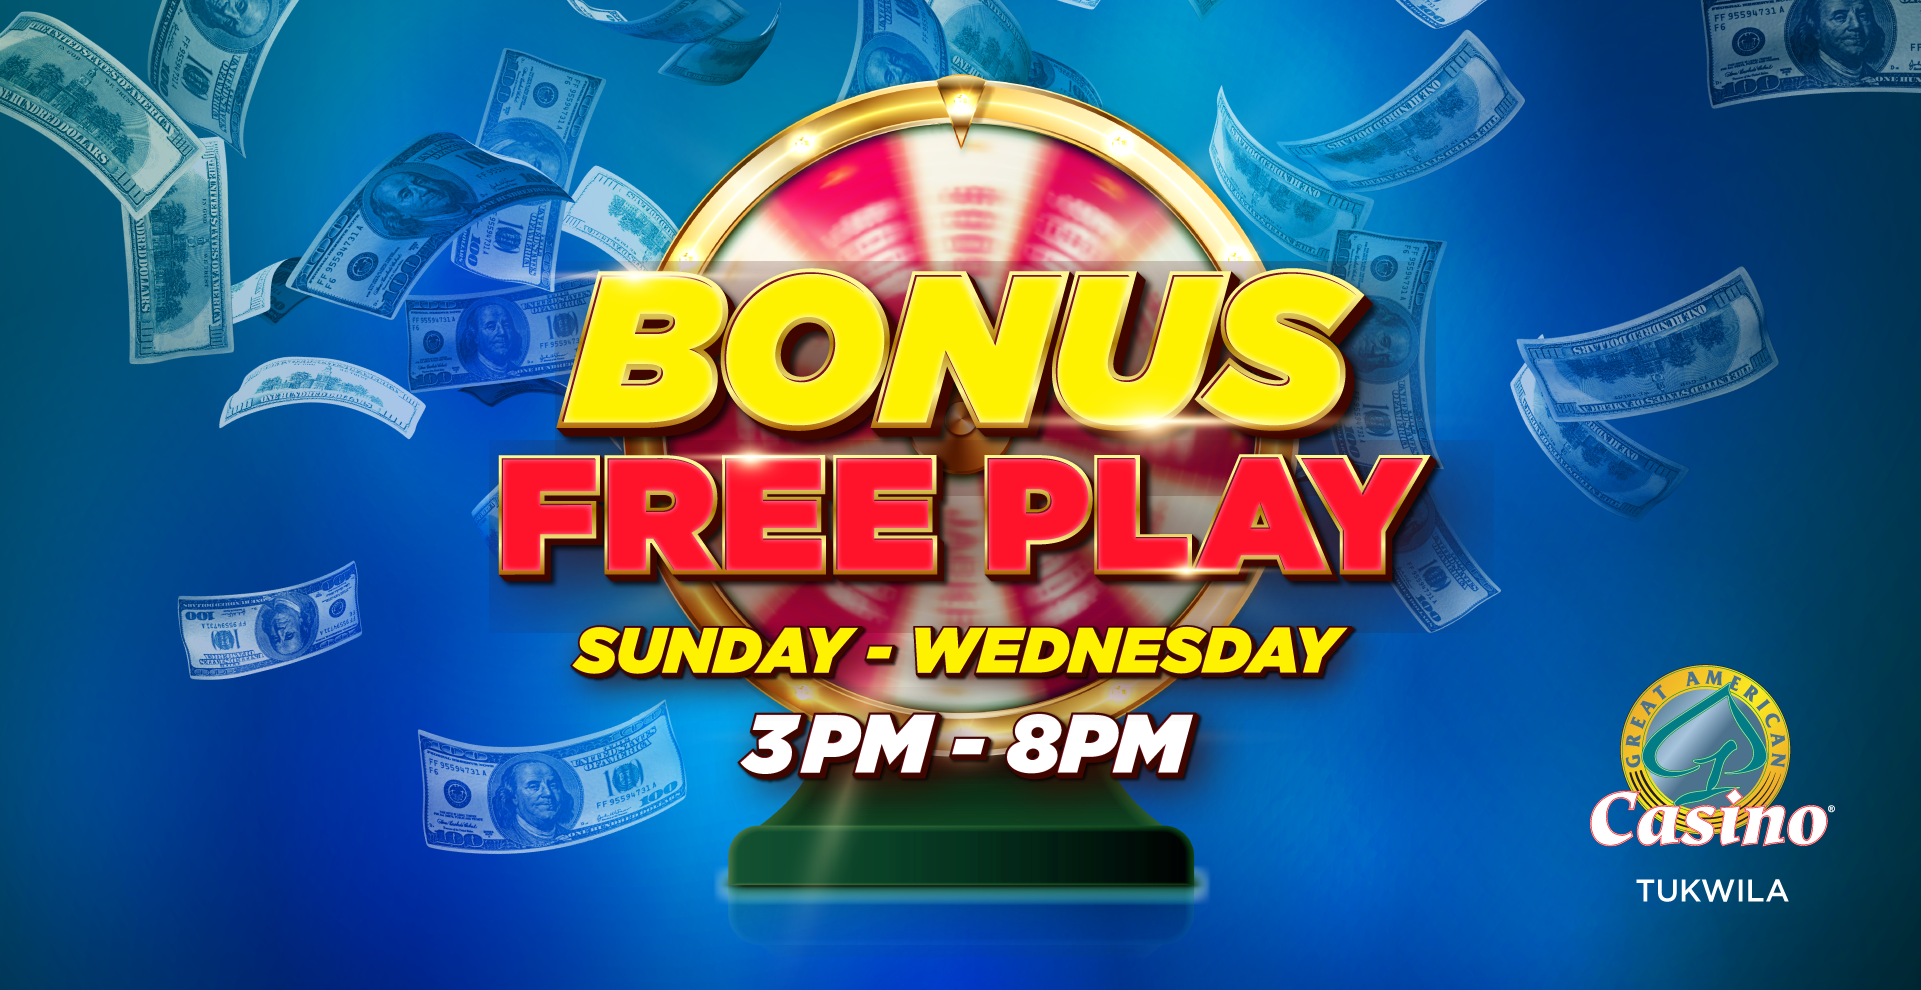 Great American Casino Tukwila | Bonus Free Play